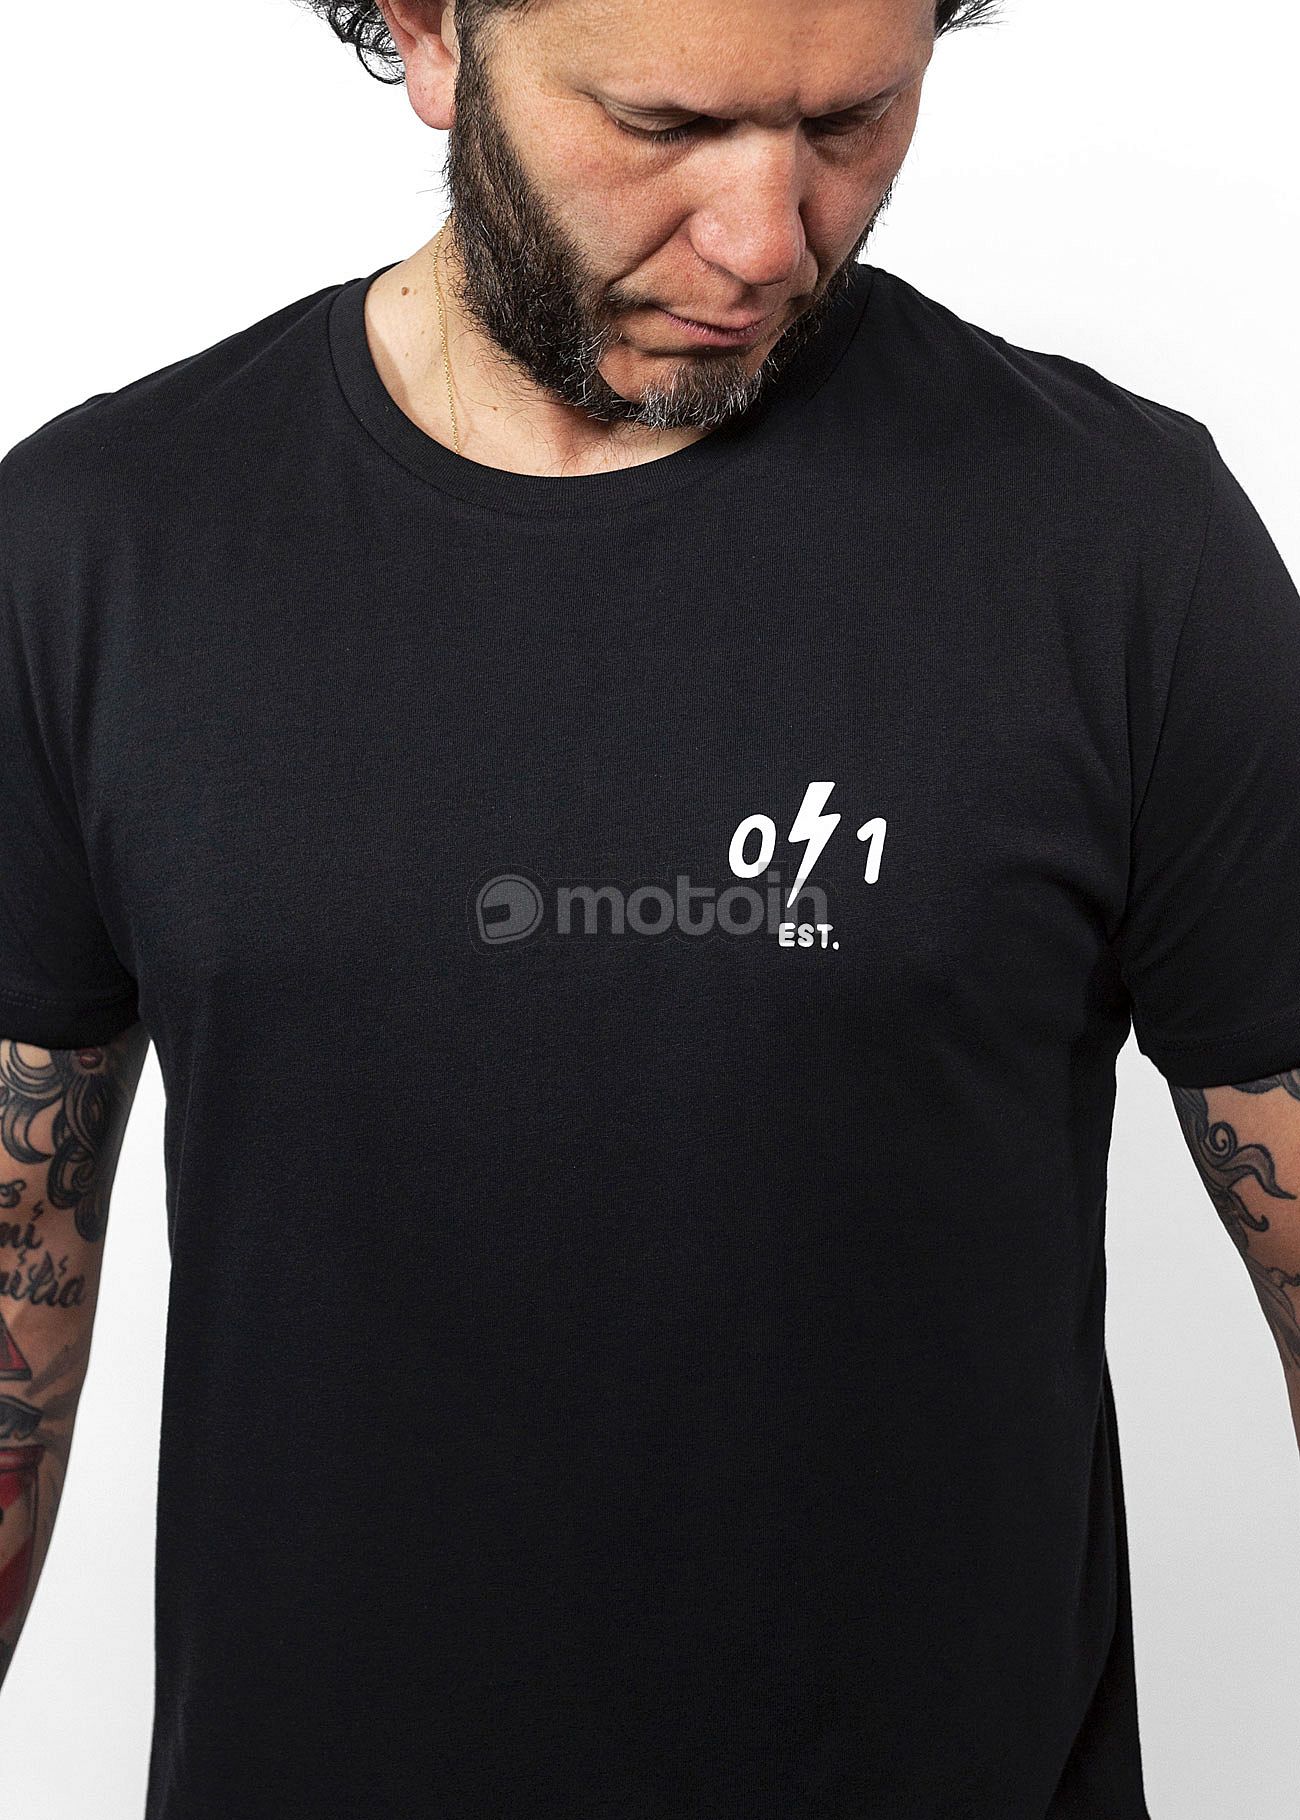 John Doe Casque Moto Moto T-Shirt Noir 